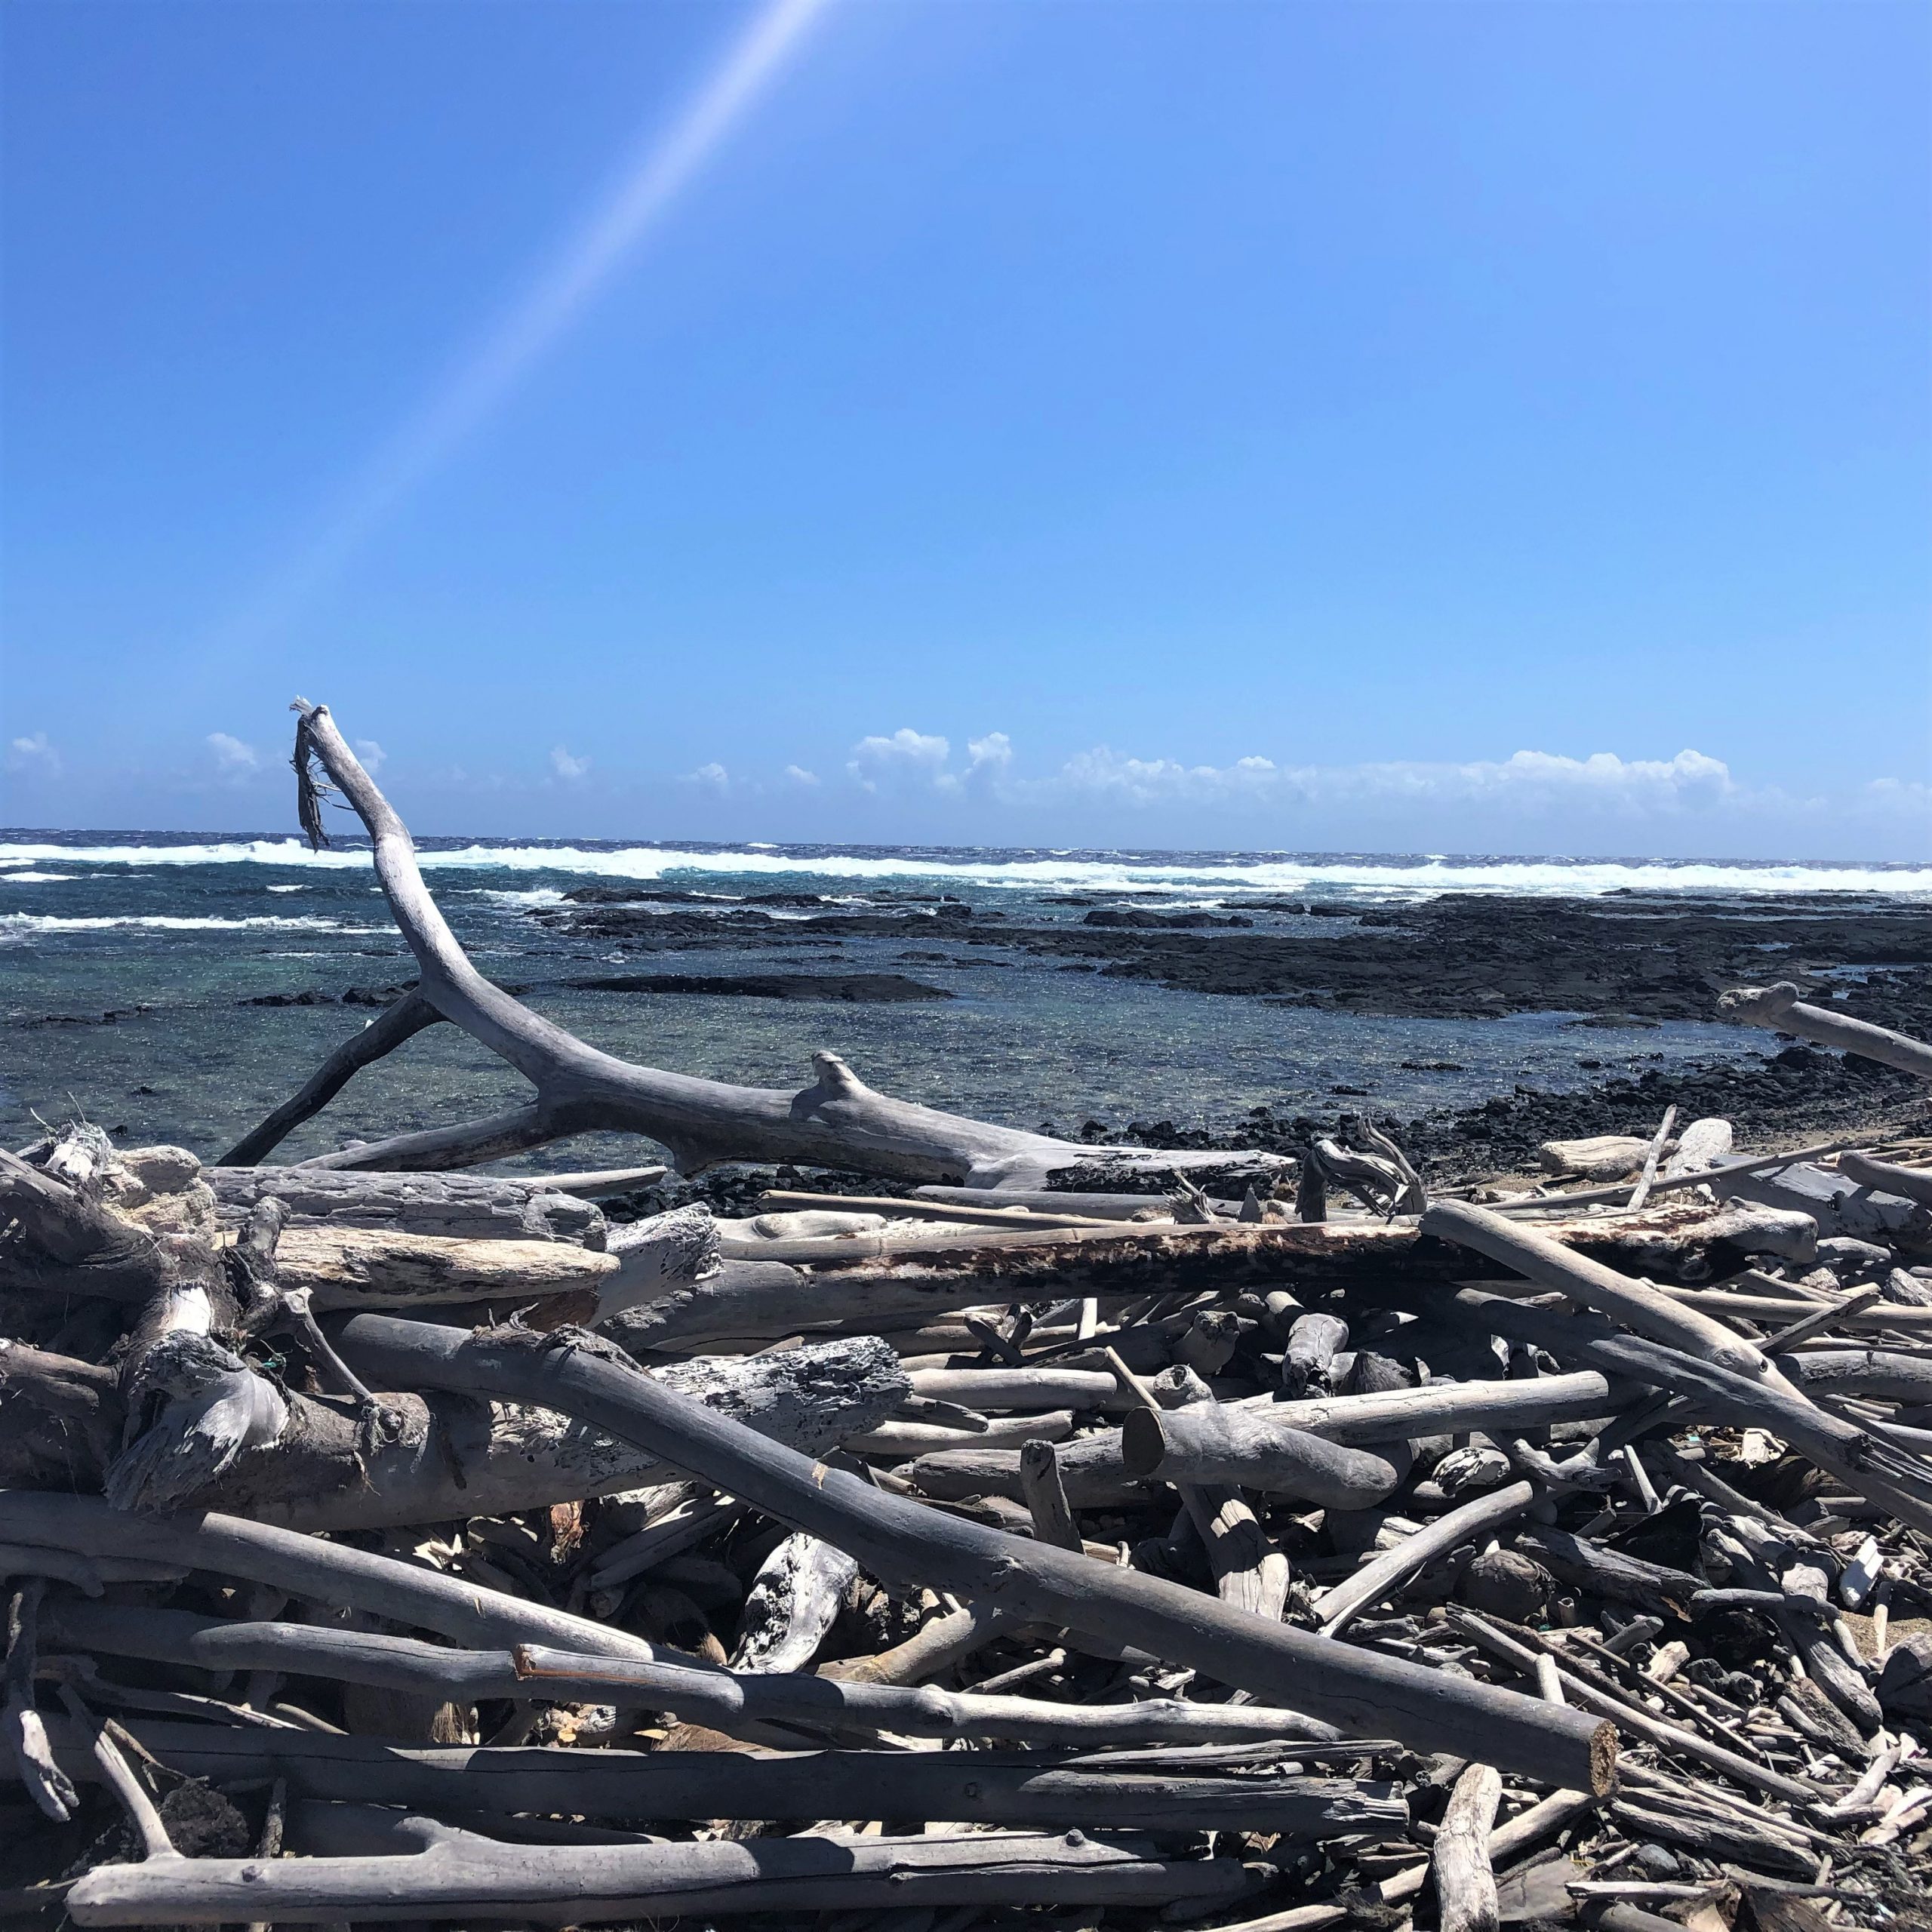 Some washed up driftwood lining the shoreline.